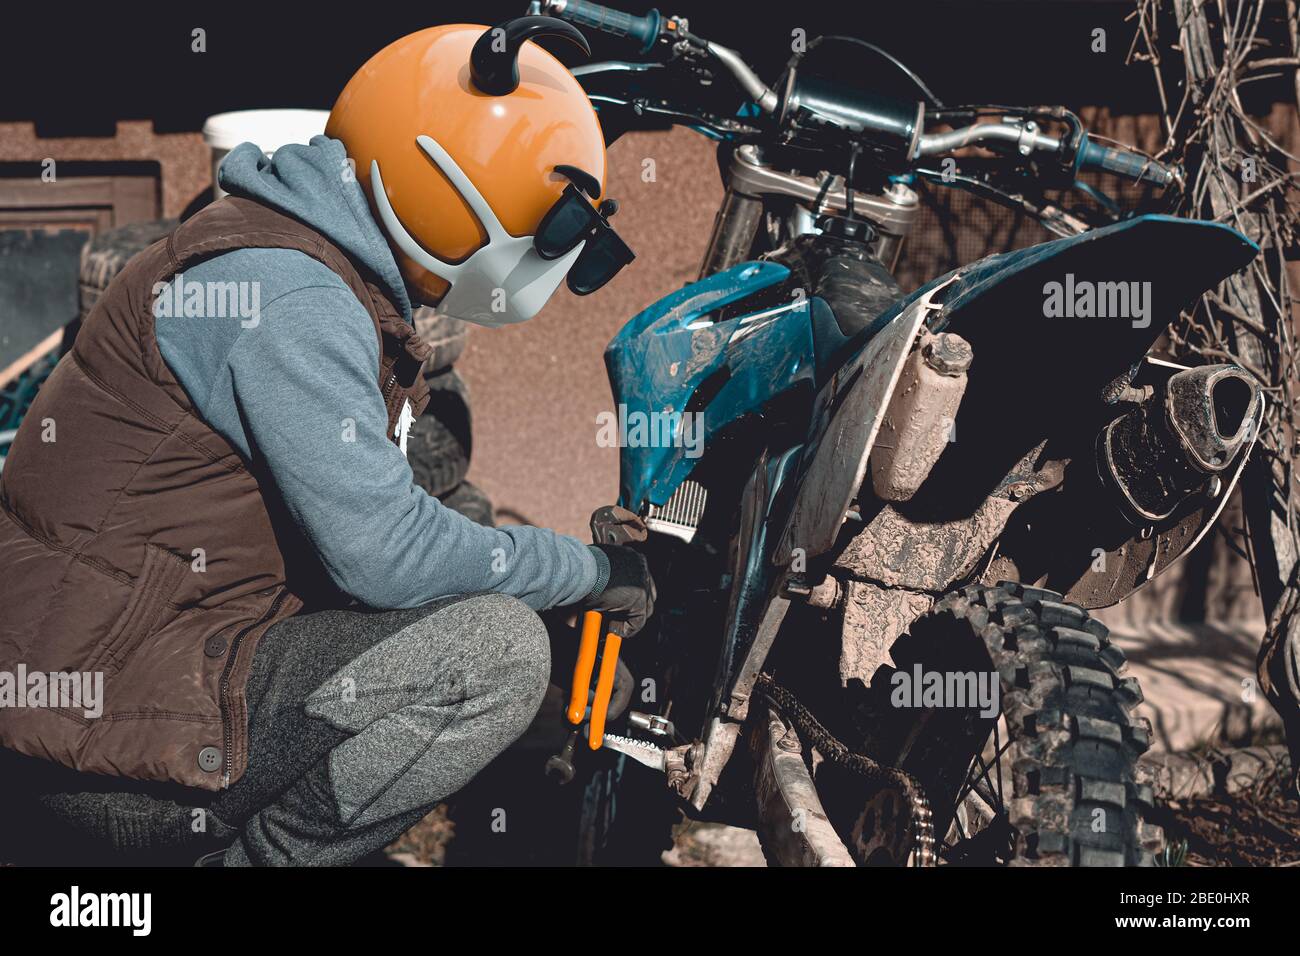 Emoji motocross rider with fancy nerd sunglasses, preparing his motorcycle for a race before season. Emoji with mask protecting against coronavirus Stock Photo